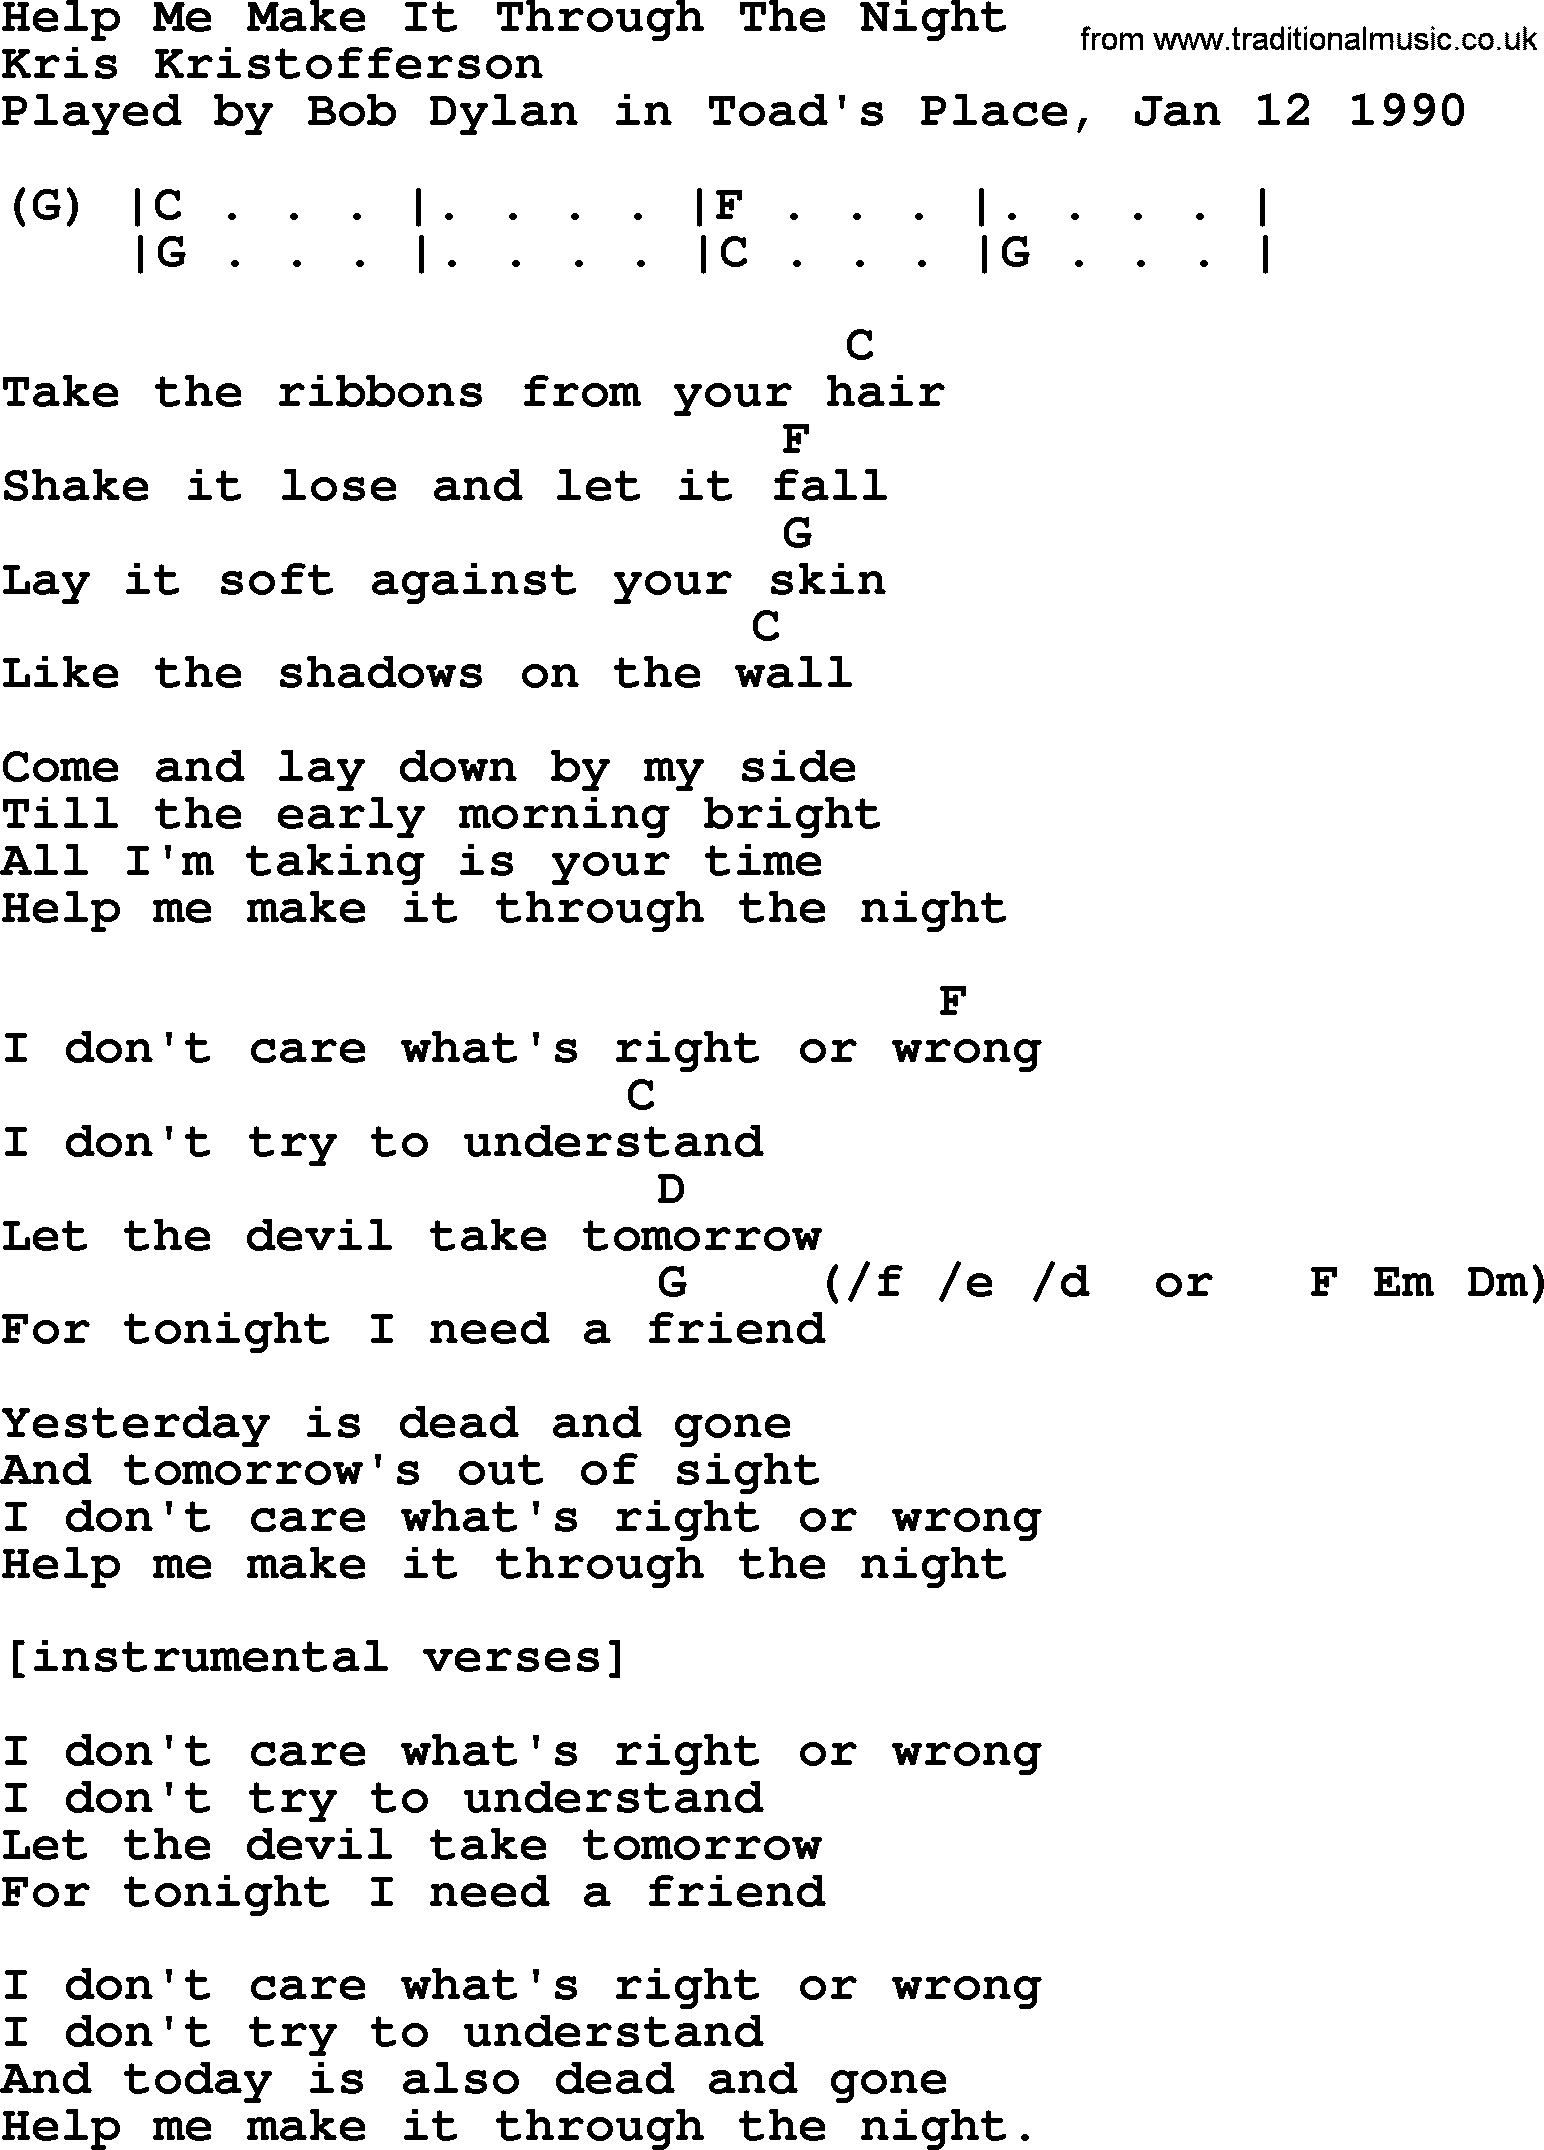 Bob Dylan song, lyrics with chords - Help Me Make It Through The Night